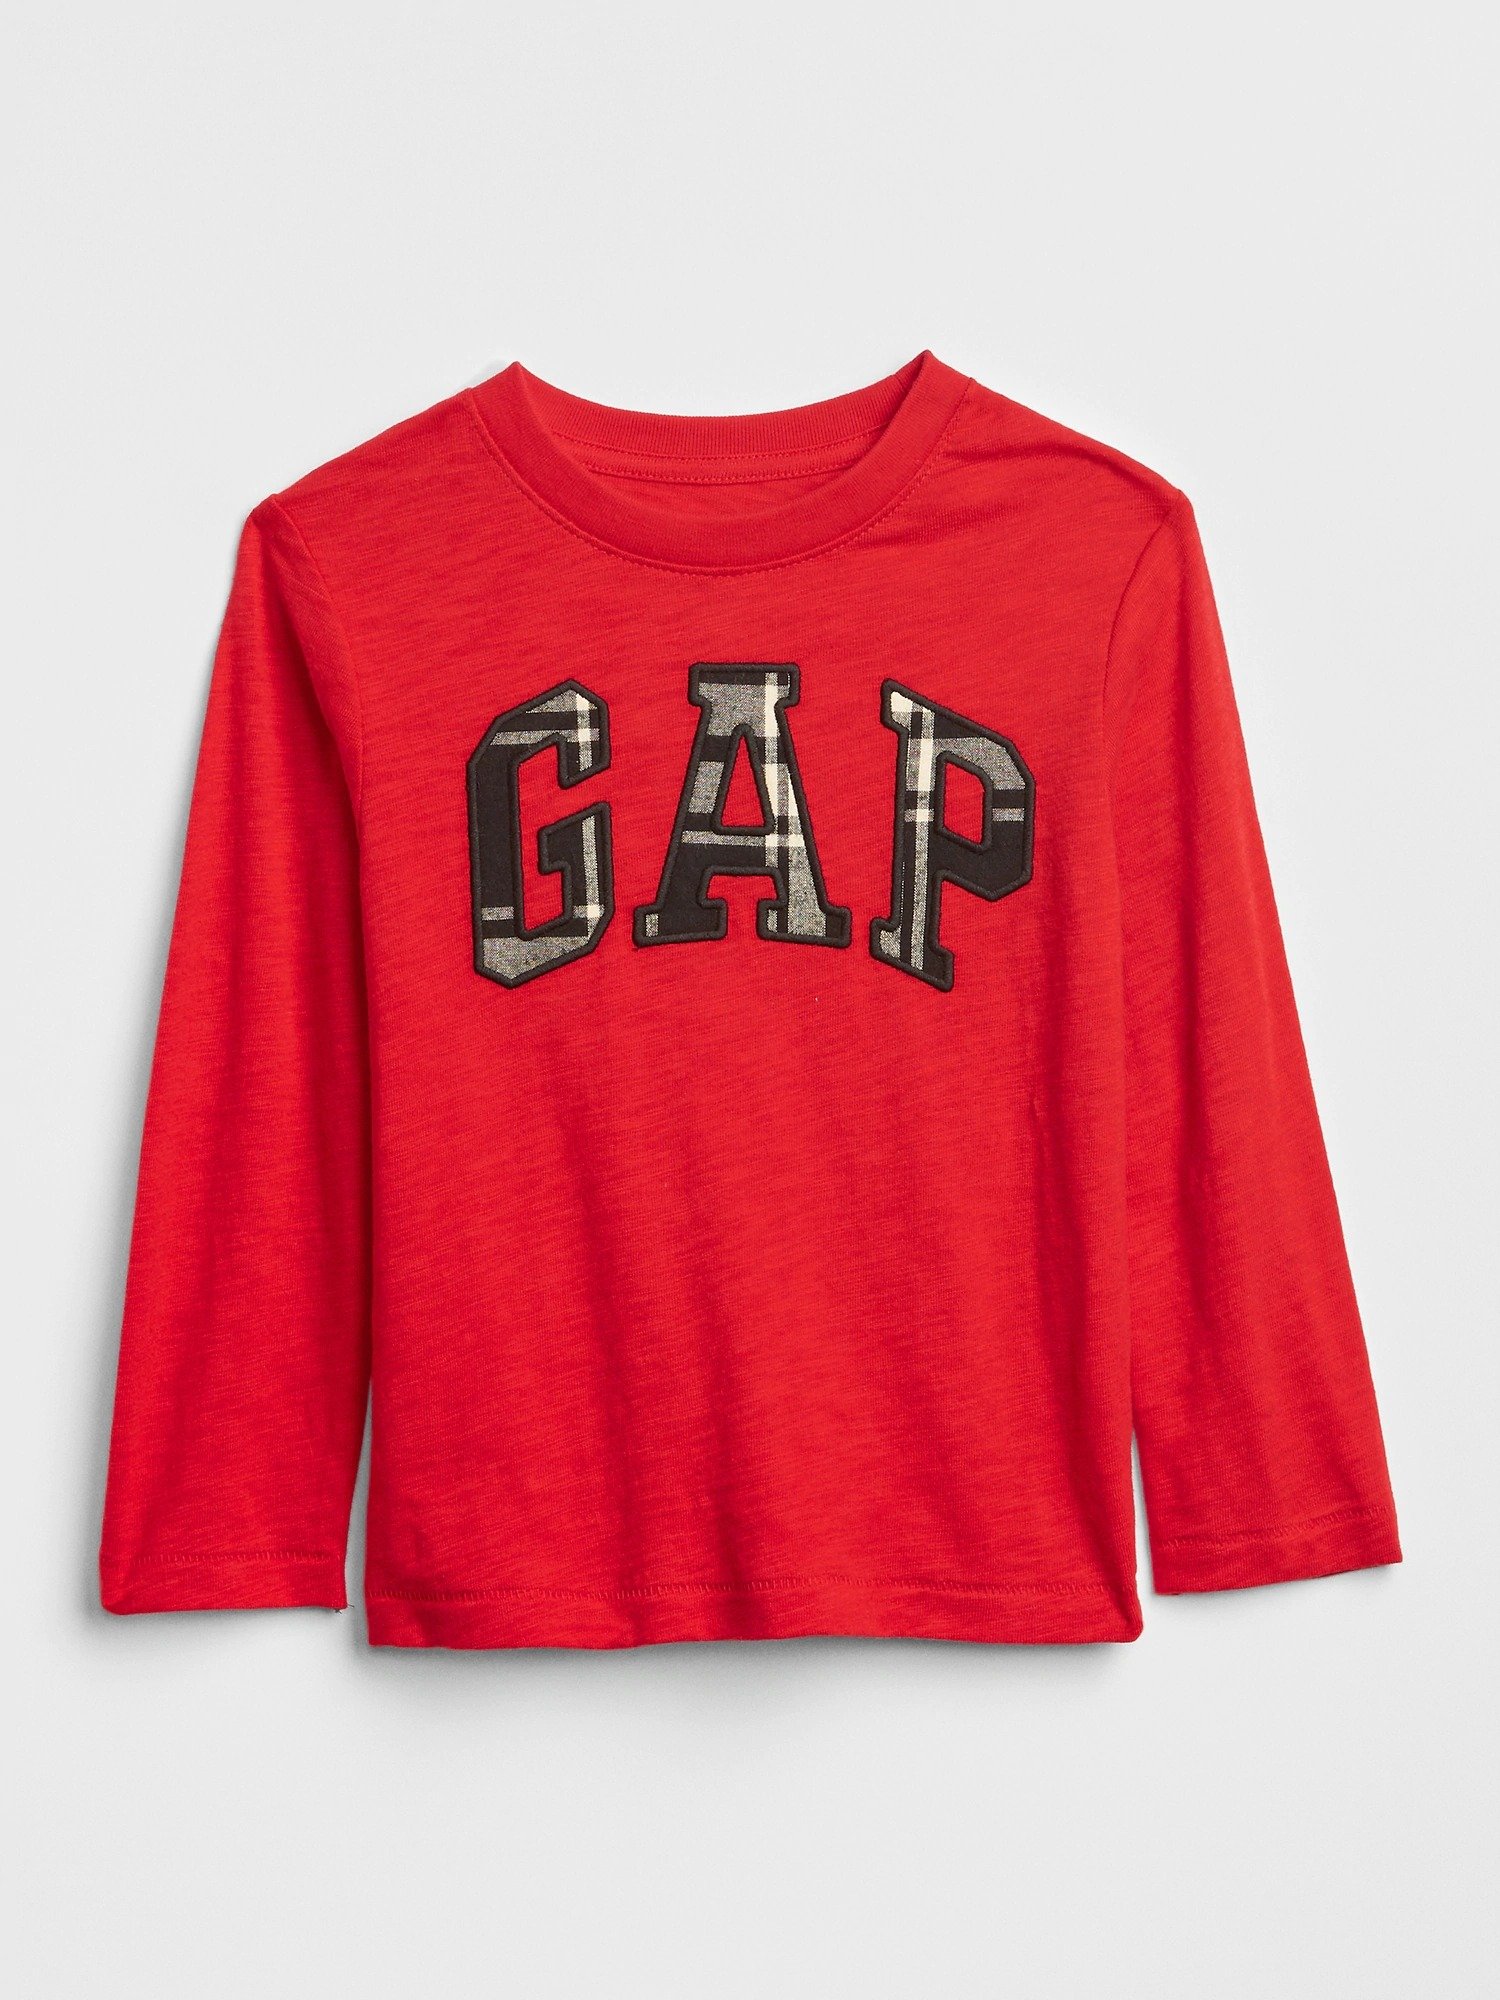 Gap Logo Baskılı T-Shirt product image